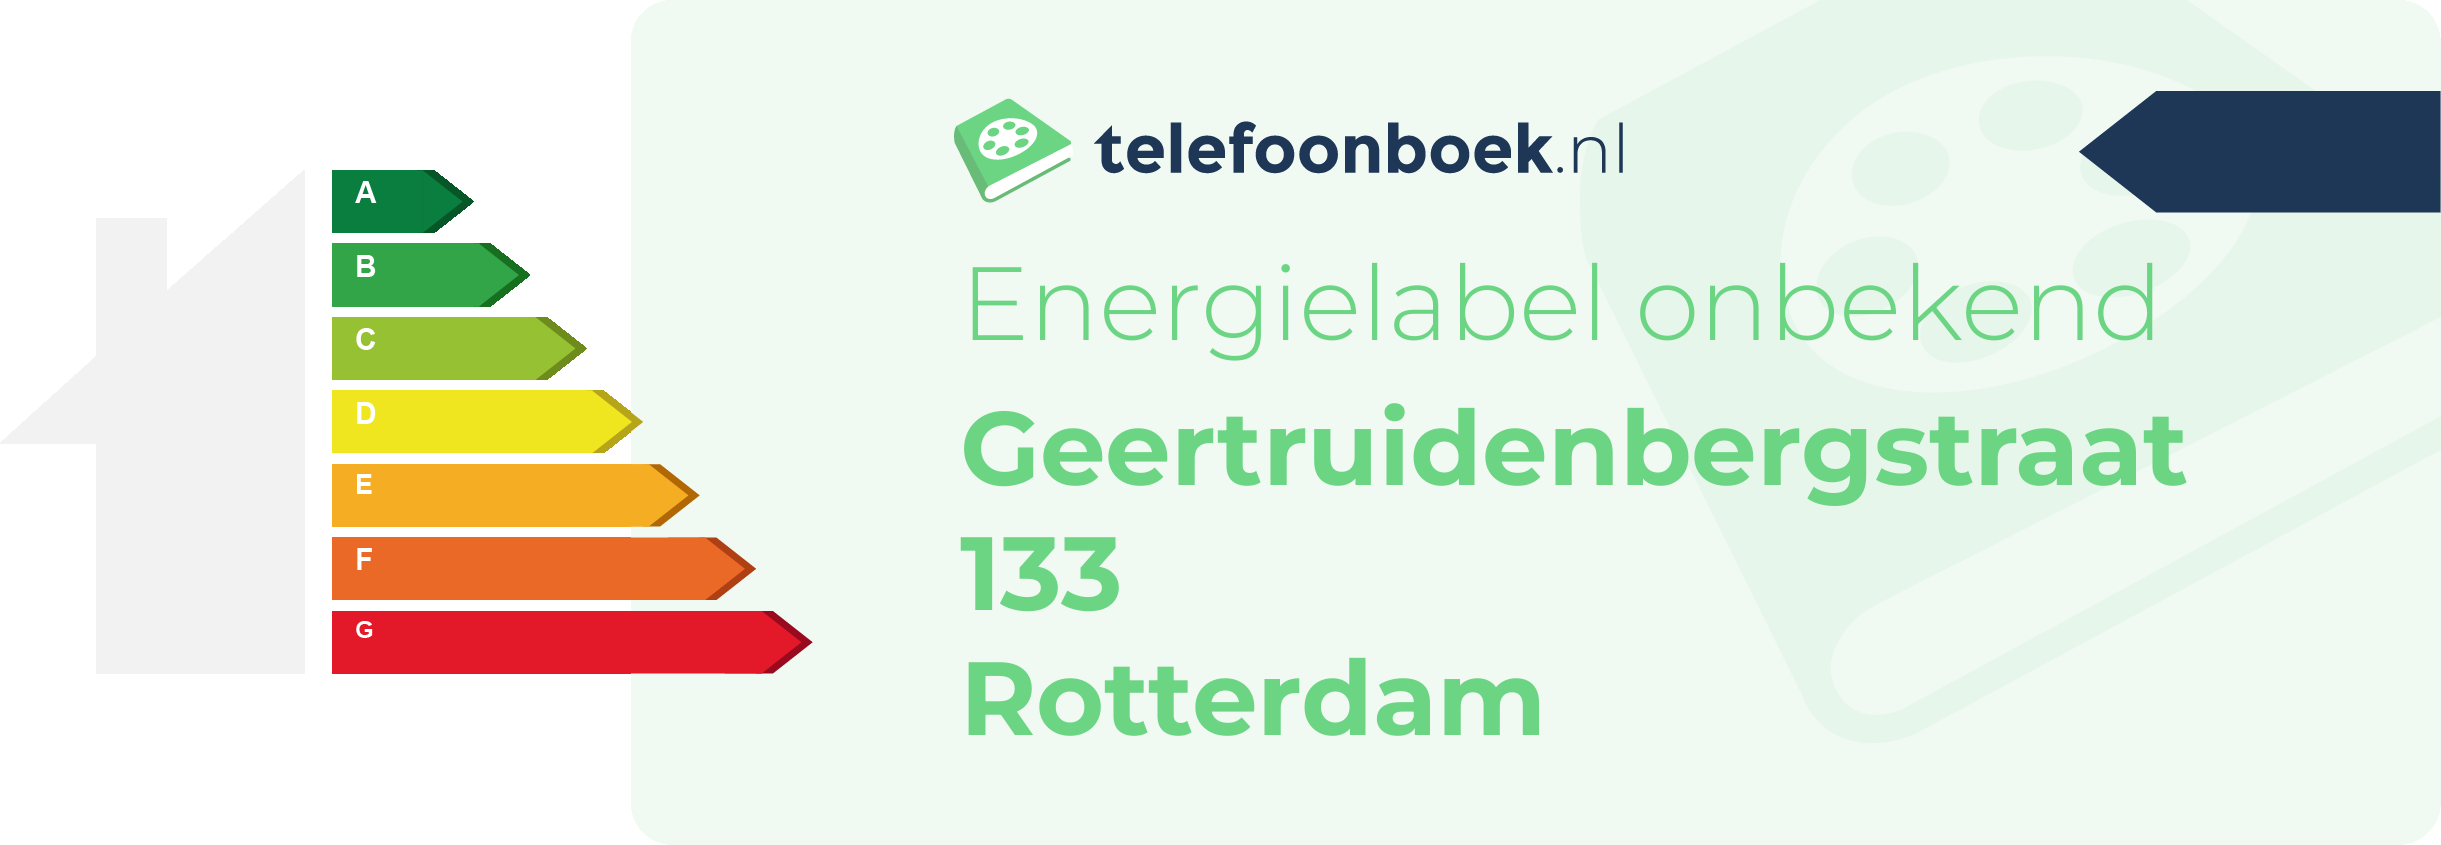 Energielabel Geertruidenbergstraat 133 Rotterdam